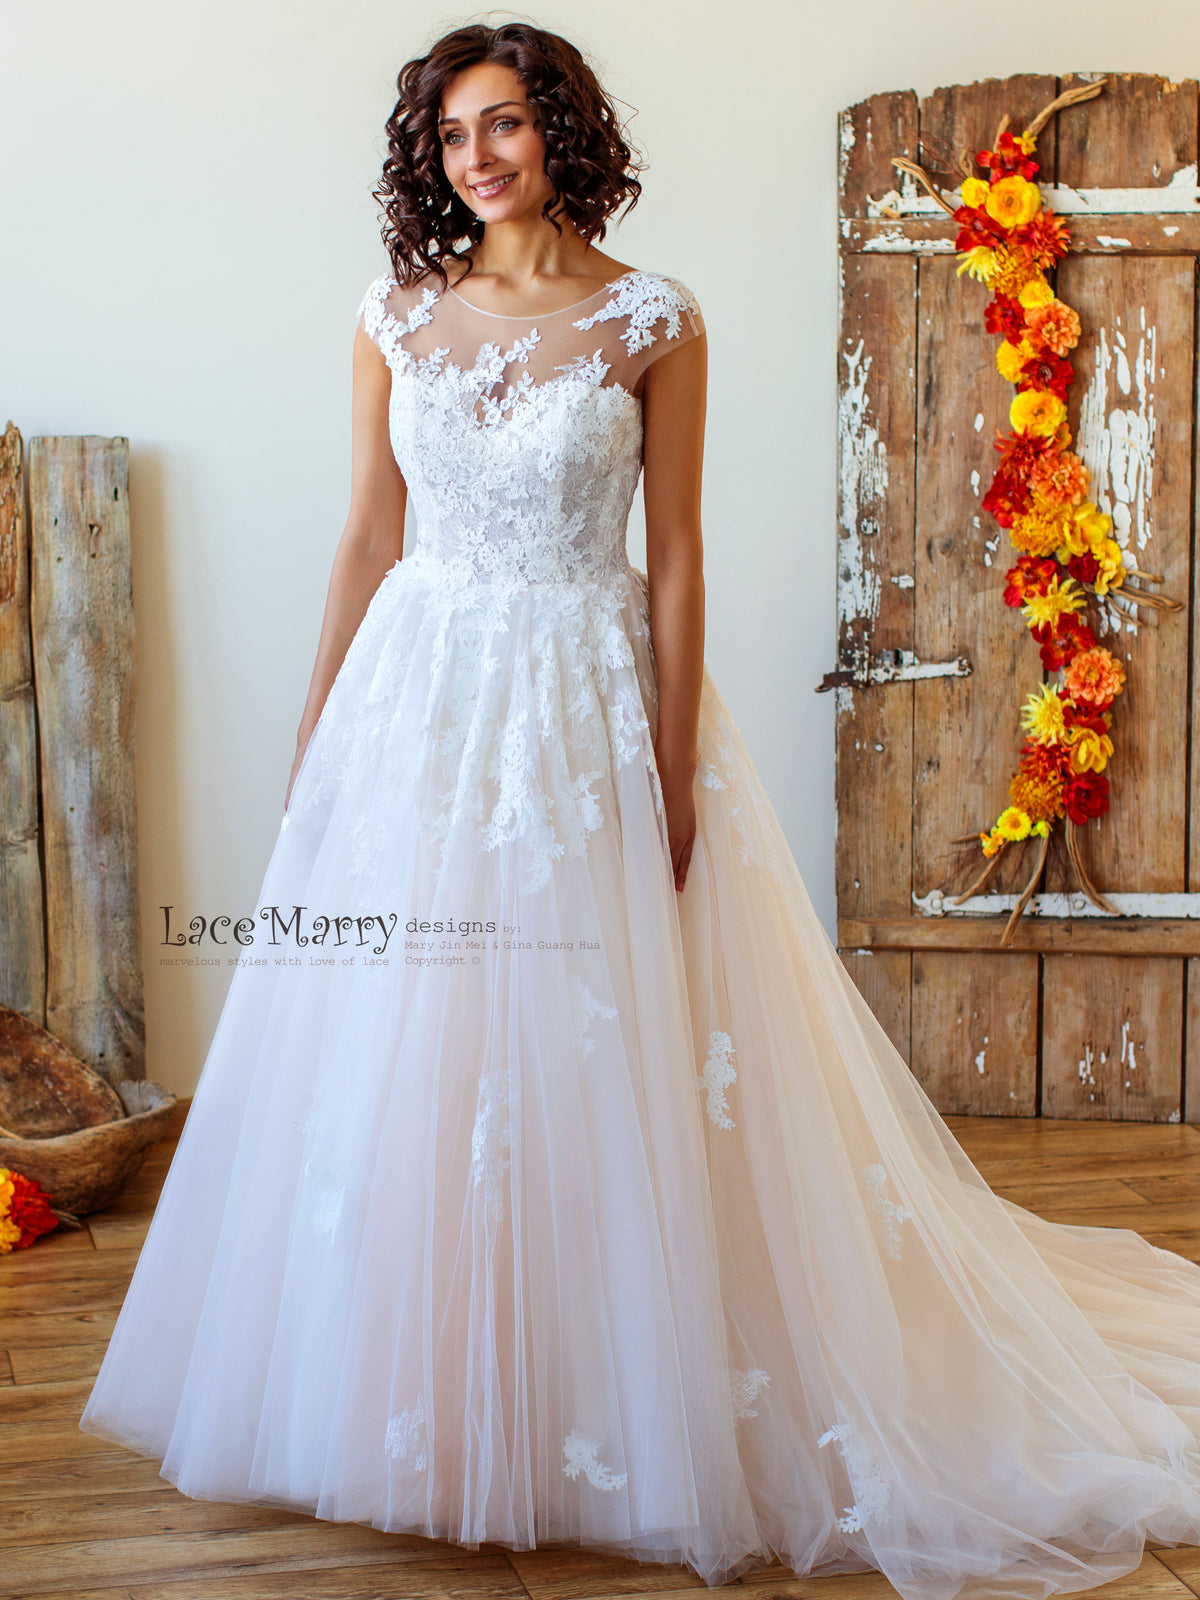 Full A Line Lace Wedding Dress